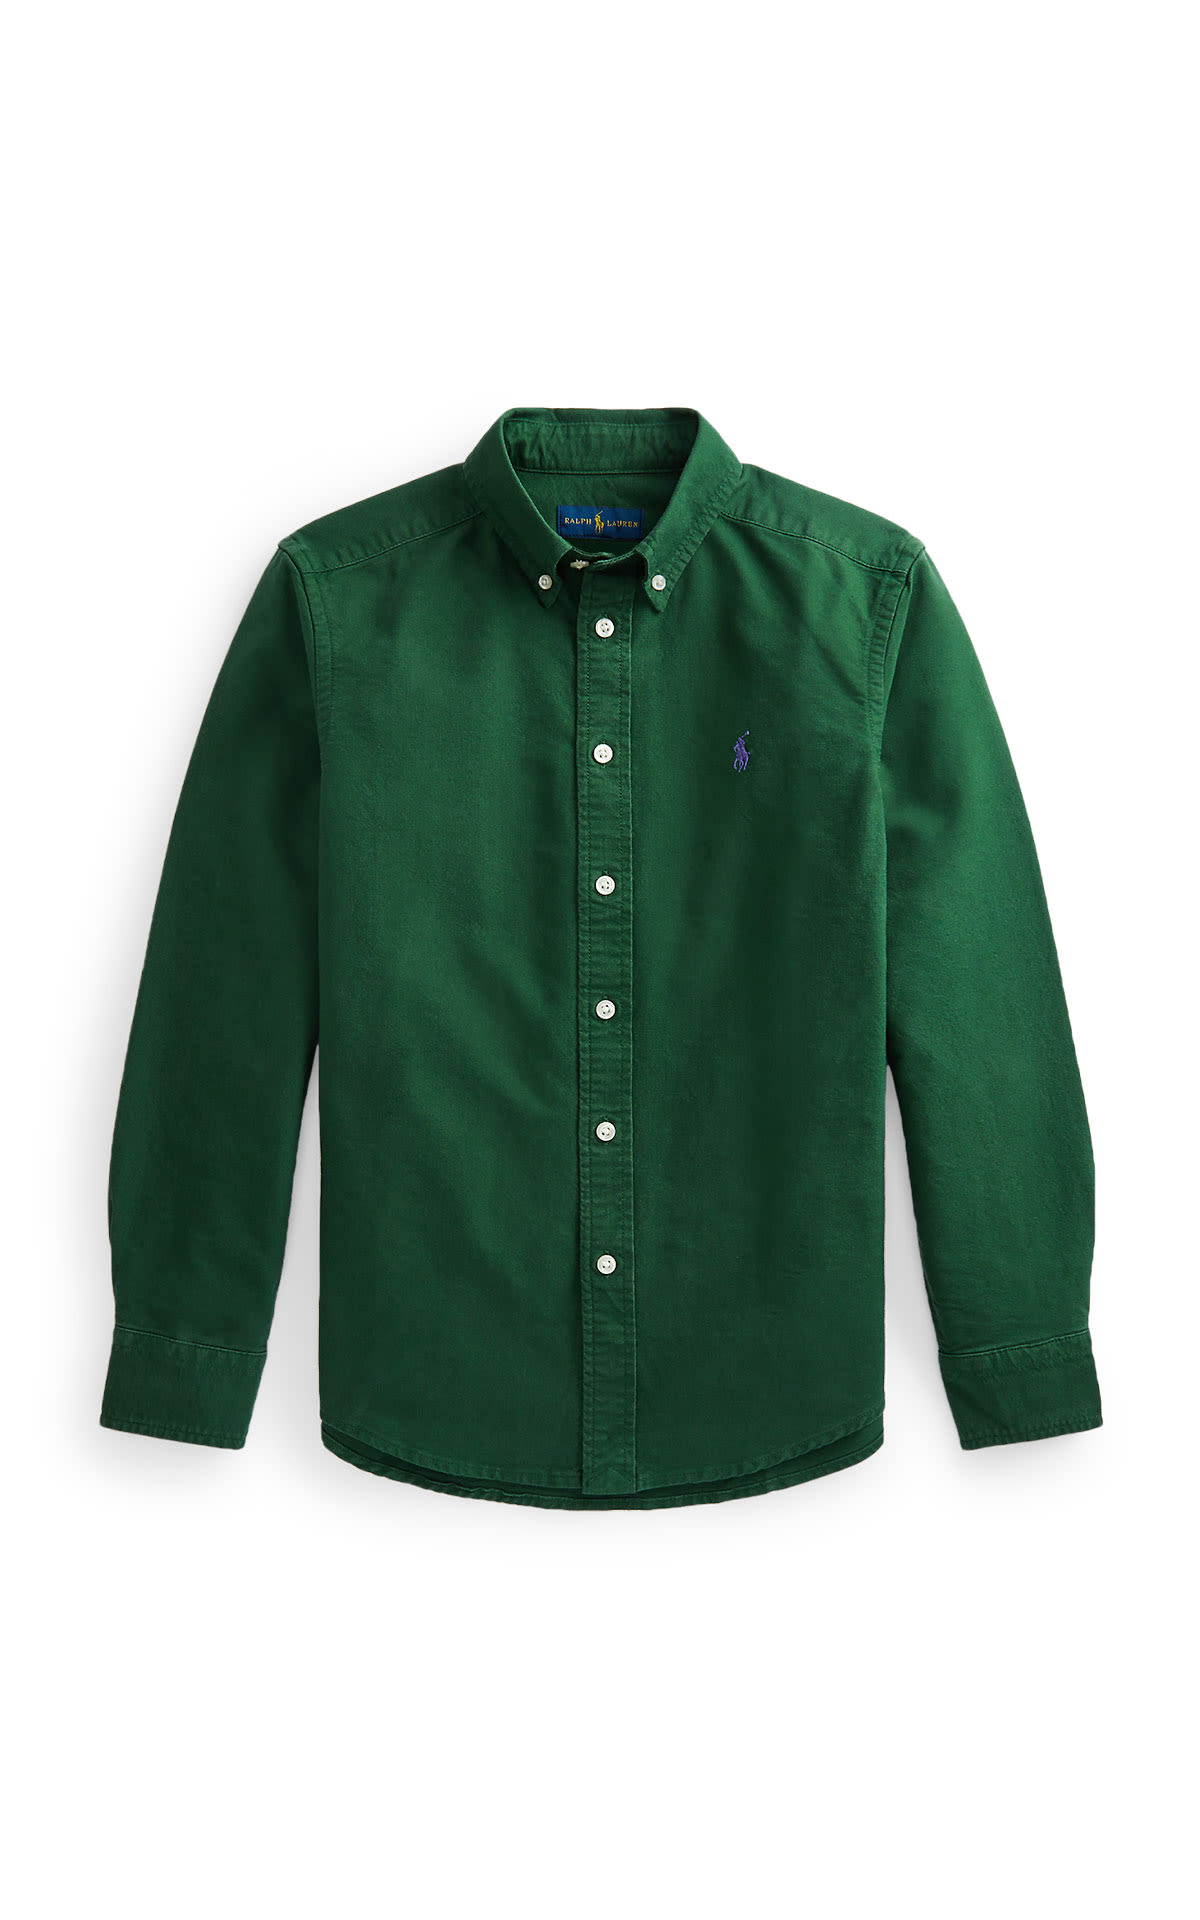 Green shirt PRL Men